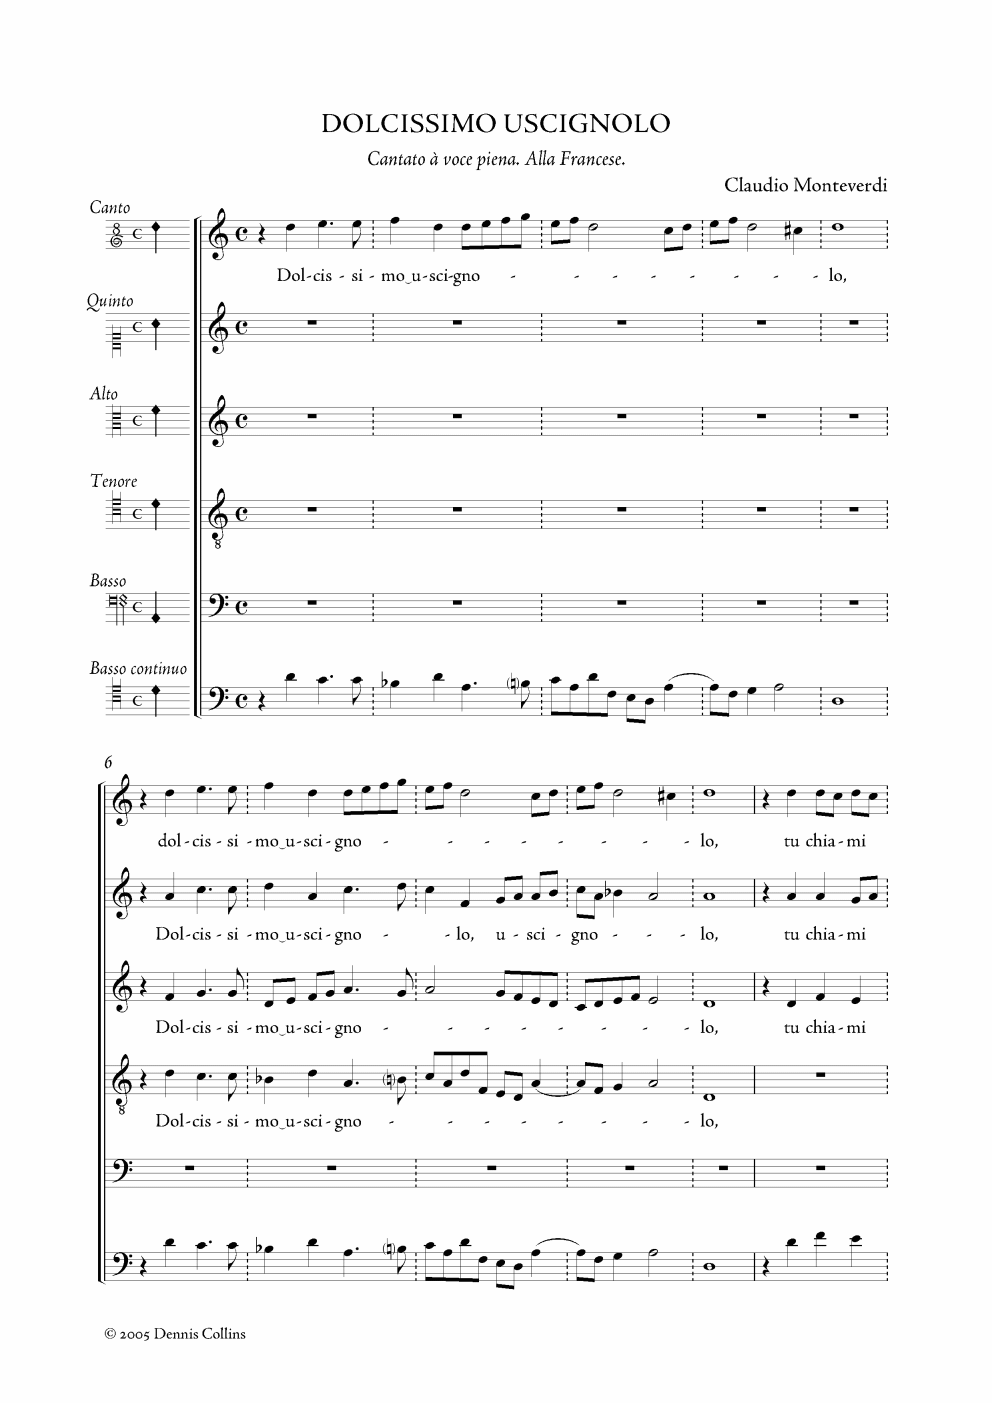 Claudio Monteverdi, Dolcissimo uscignolo